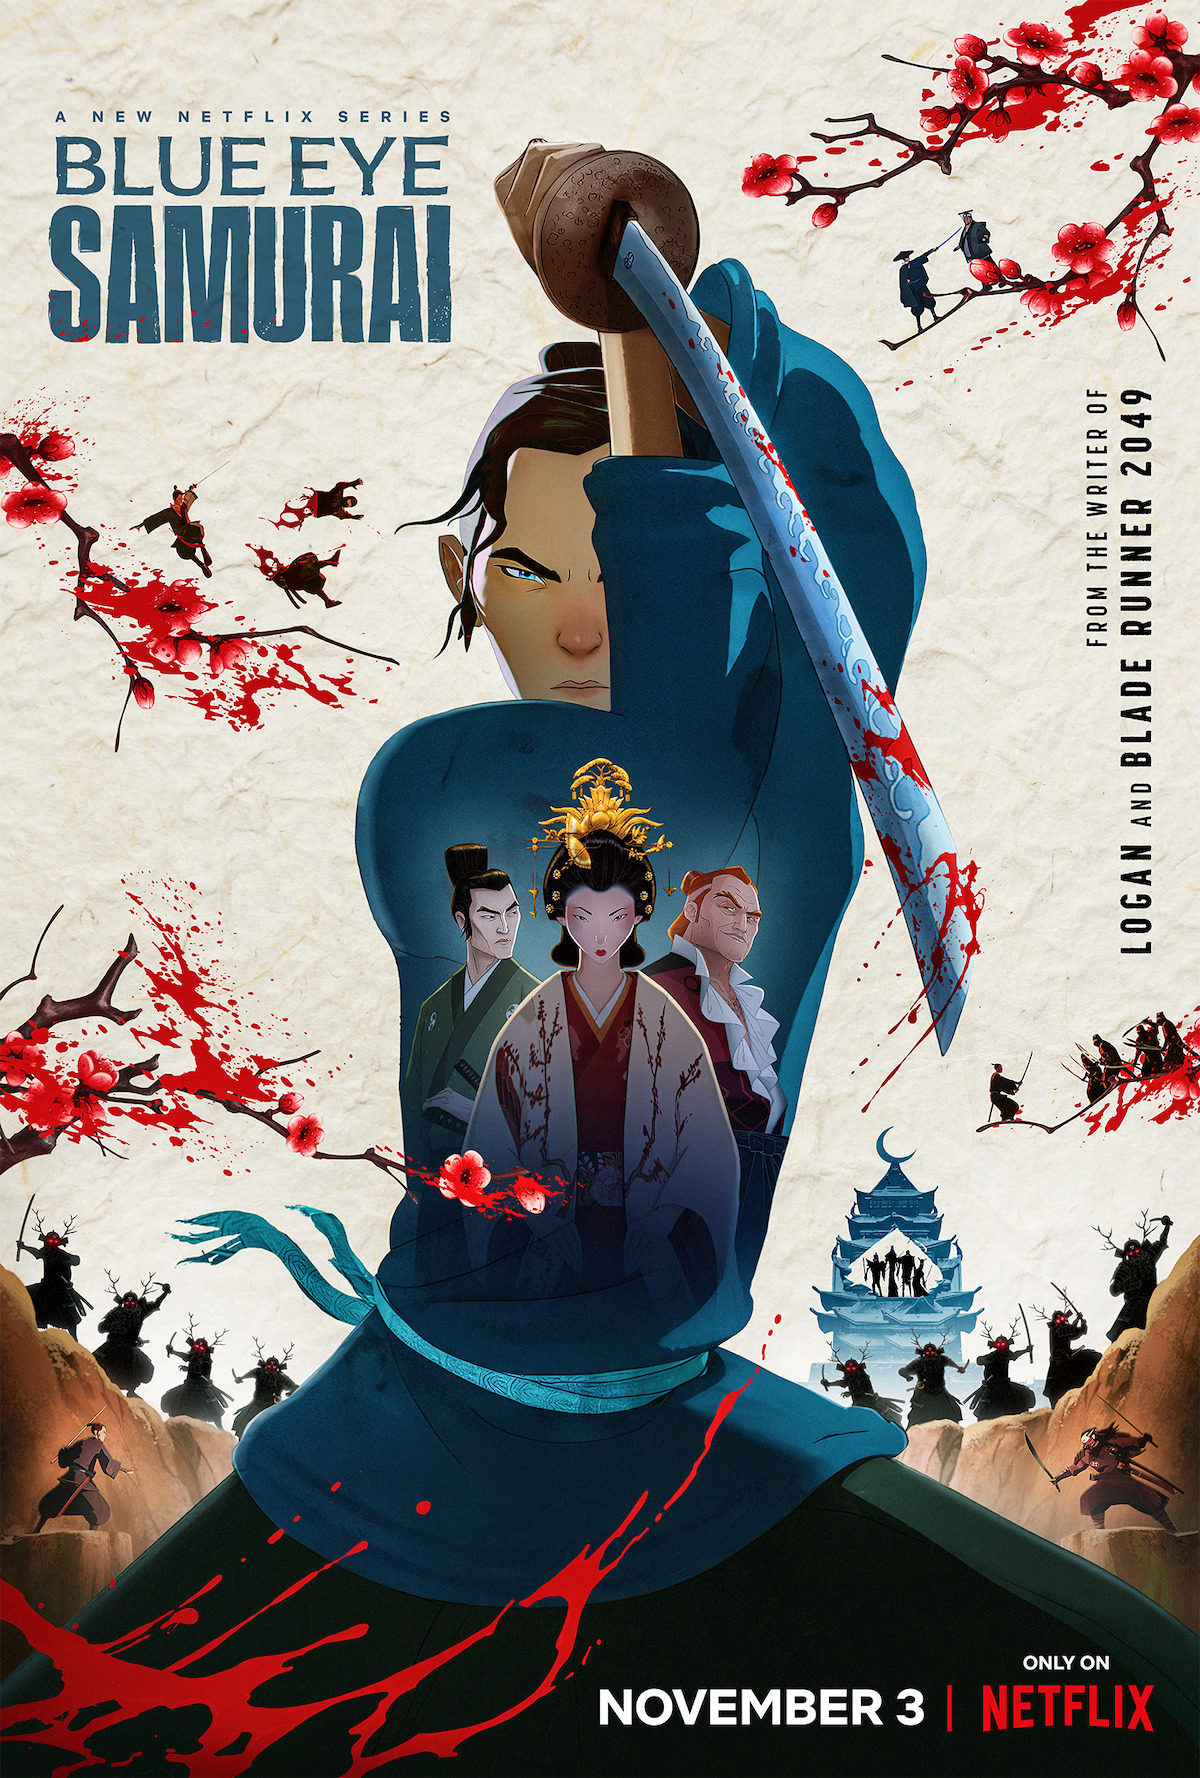 Afro Samurai Creator Draws Ghost of Tsushima Posters - Interest - Anime  News Network